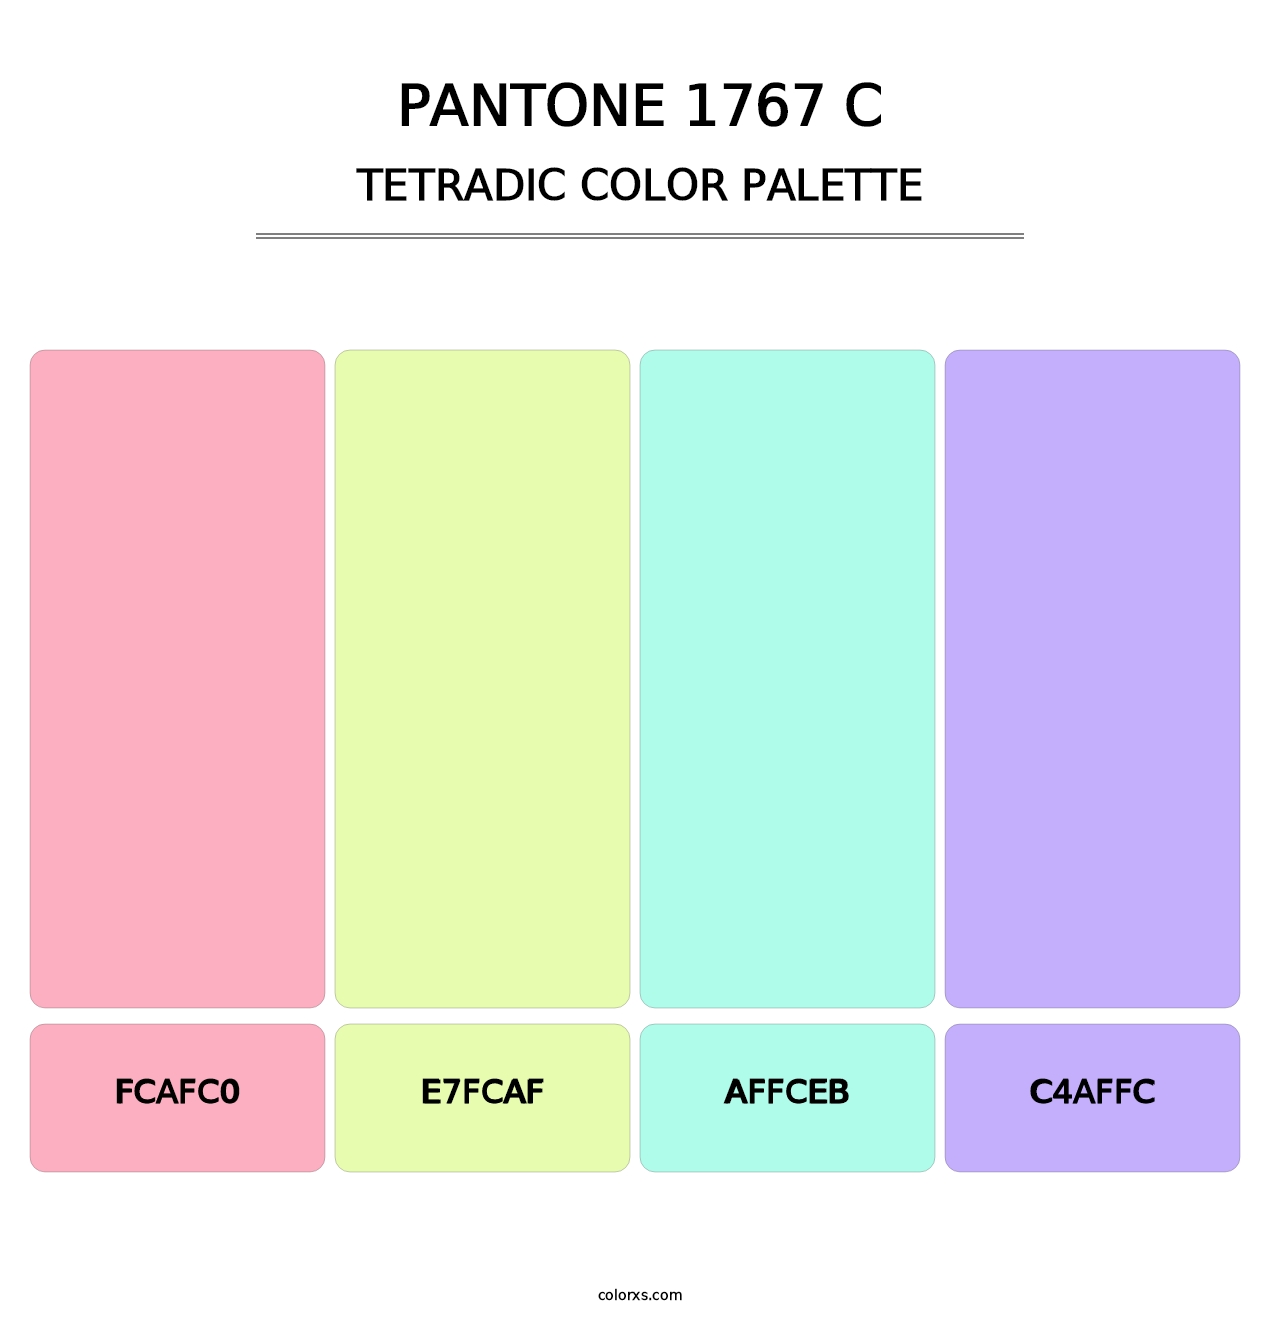 PANTONE 1767 C - Tetradic Color Palette